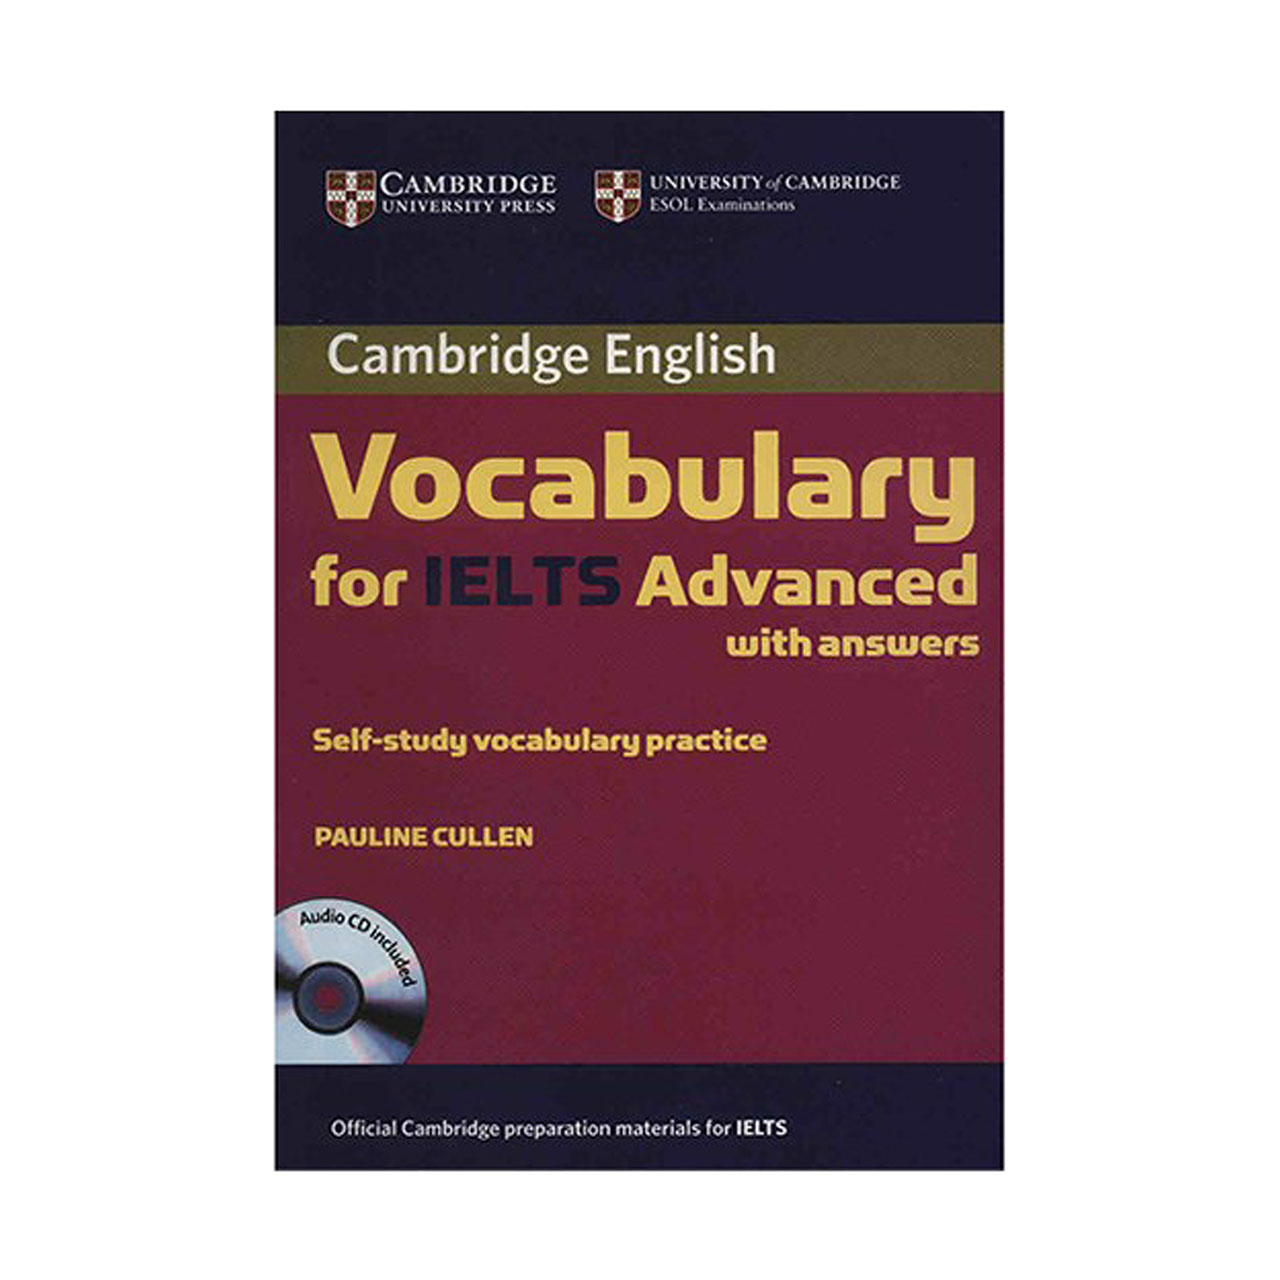 grammar and vocabulary for advanced cambridge